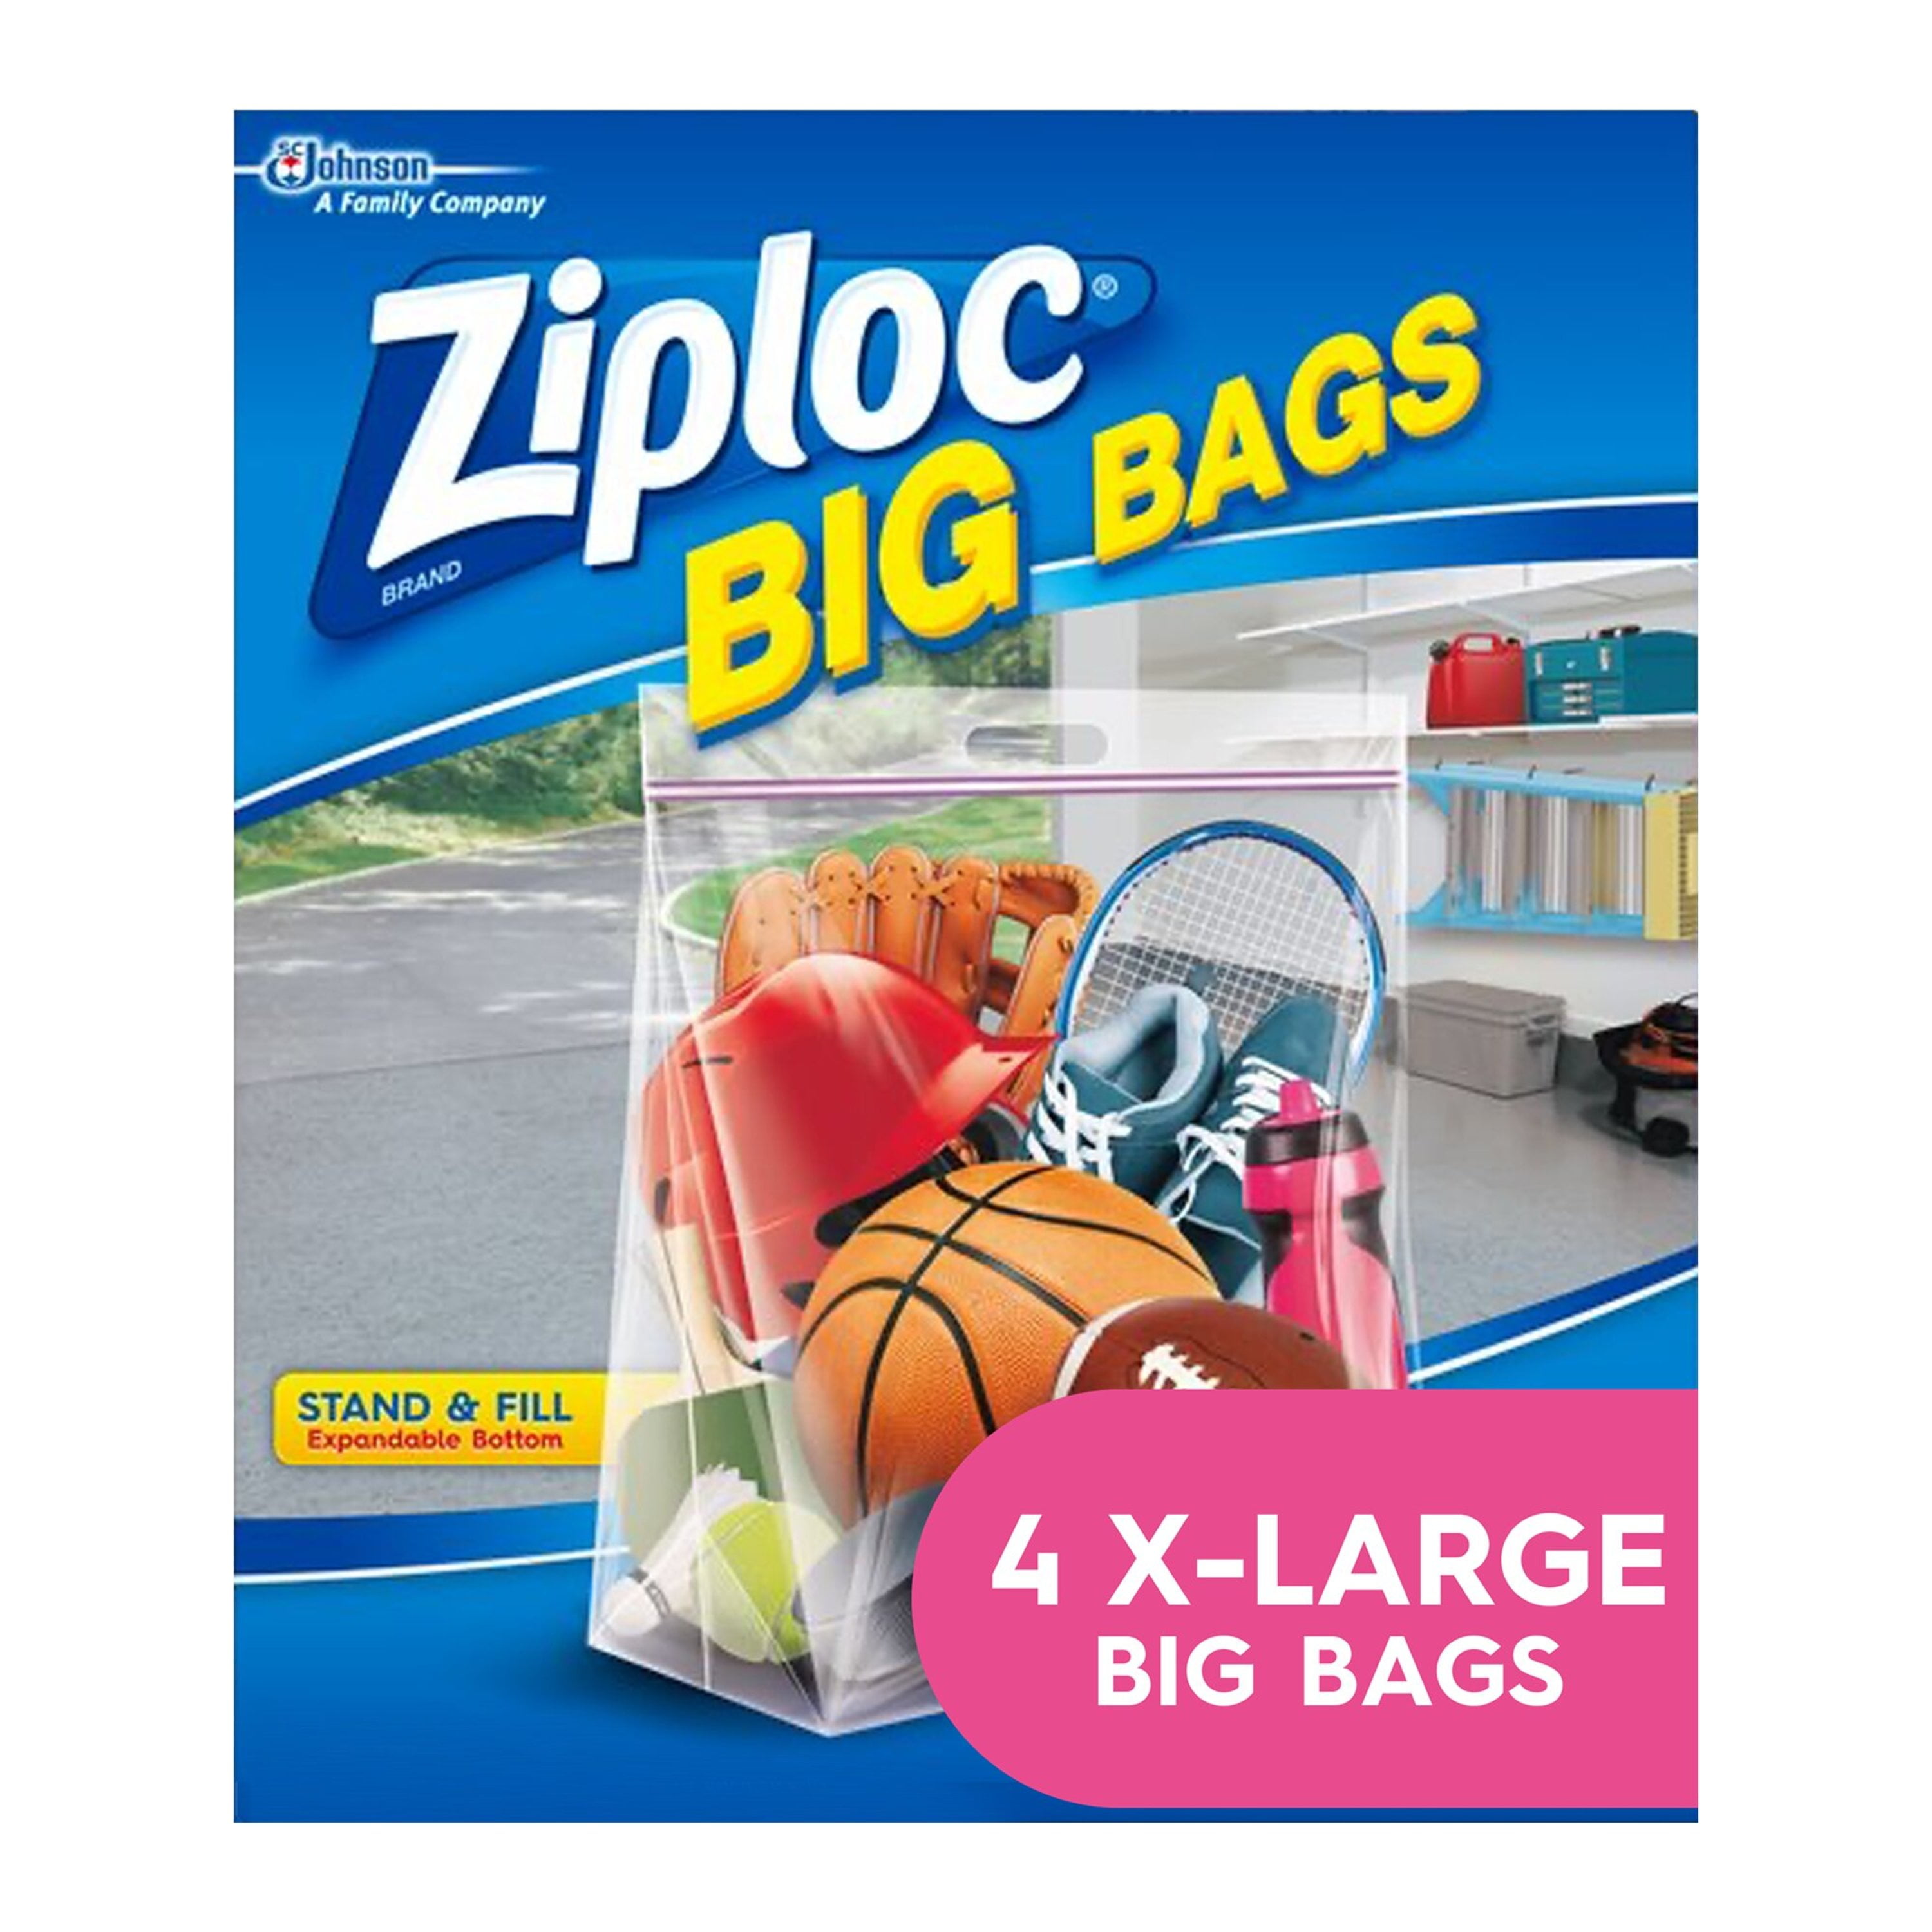 Ziploc Big-Bag 5-Count 3-Gallon (s) Storage Bags in the Plastic Storage Bags  department at